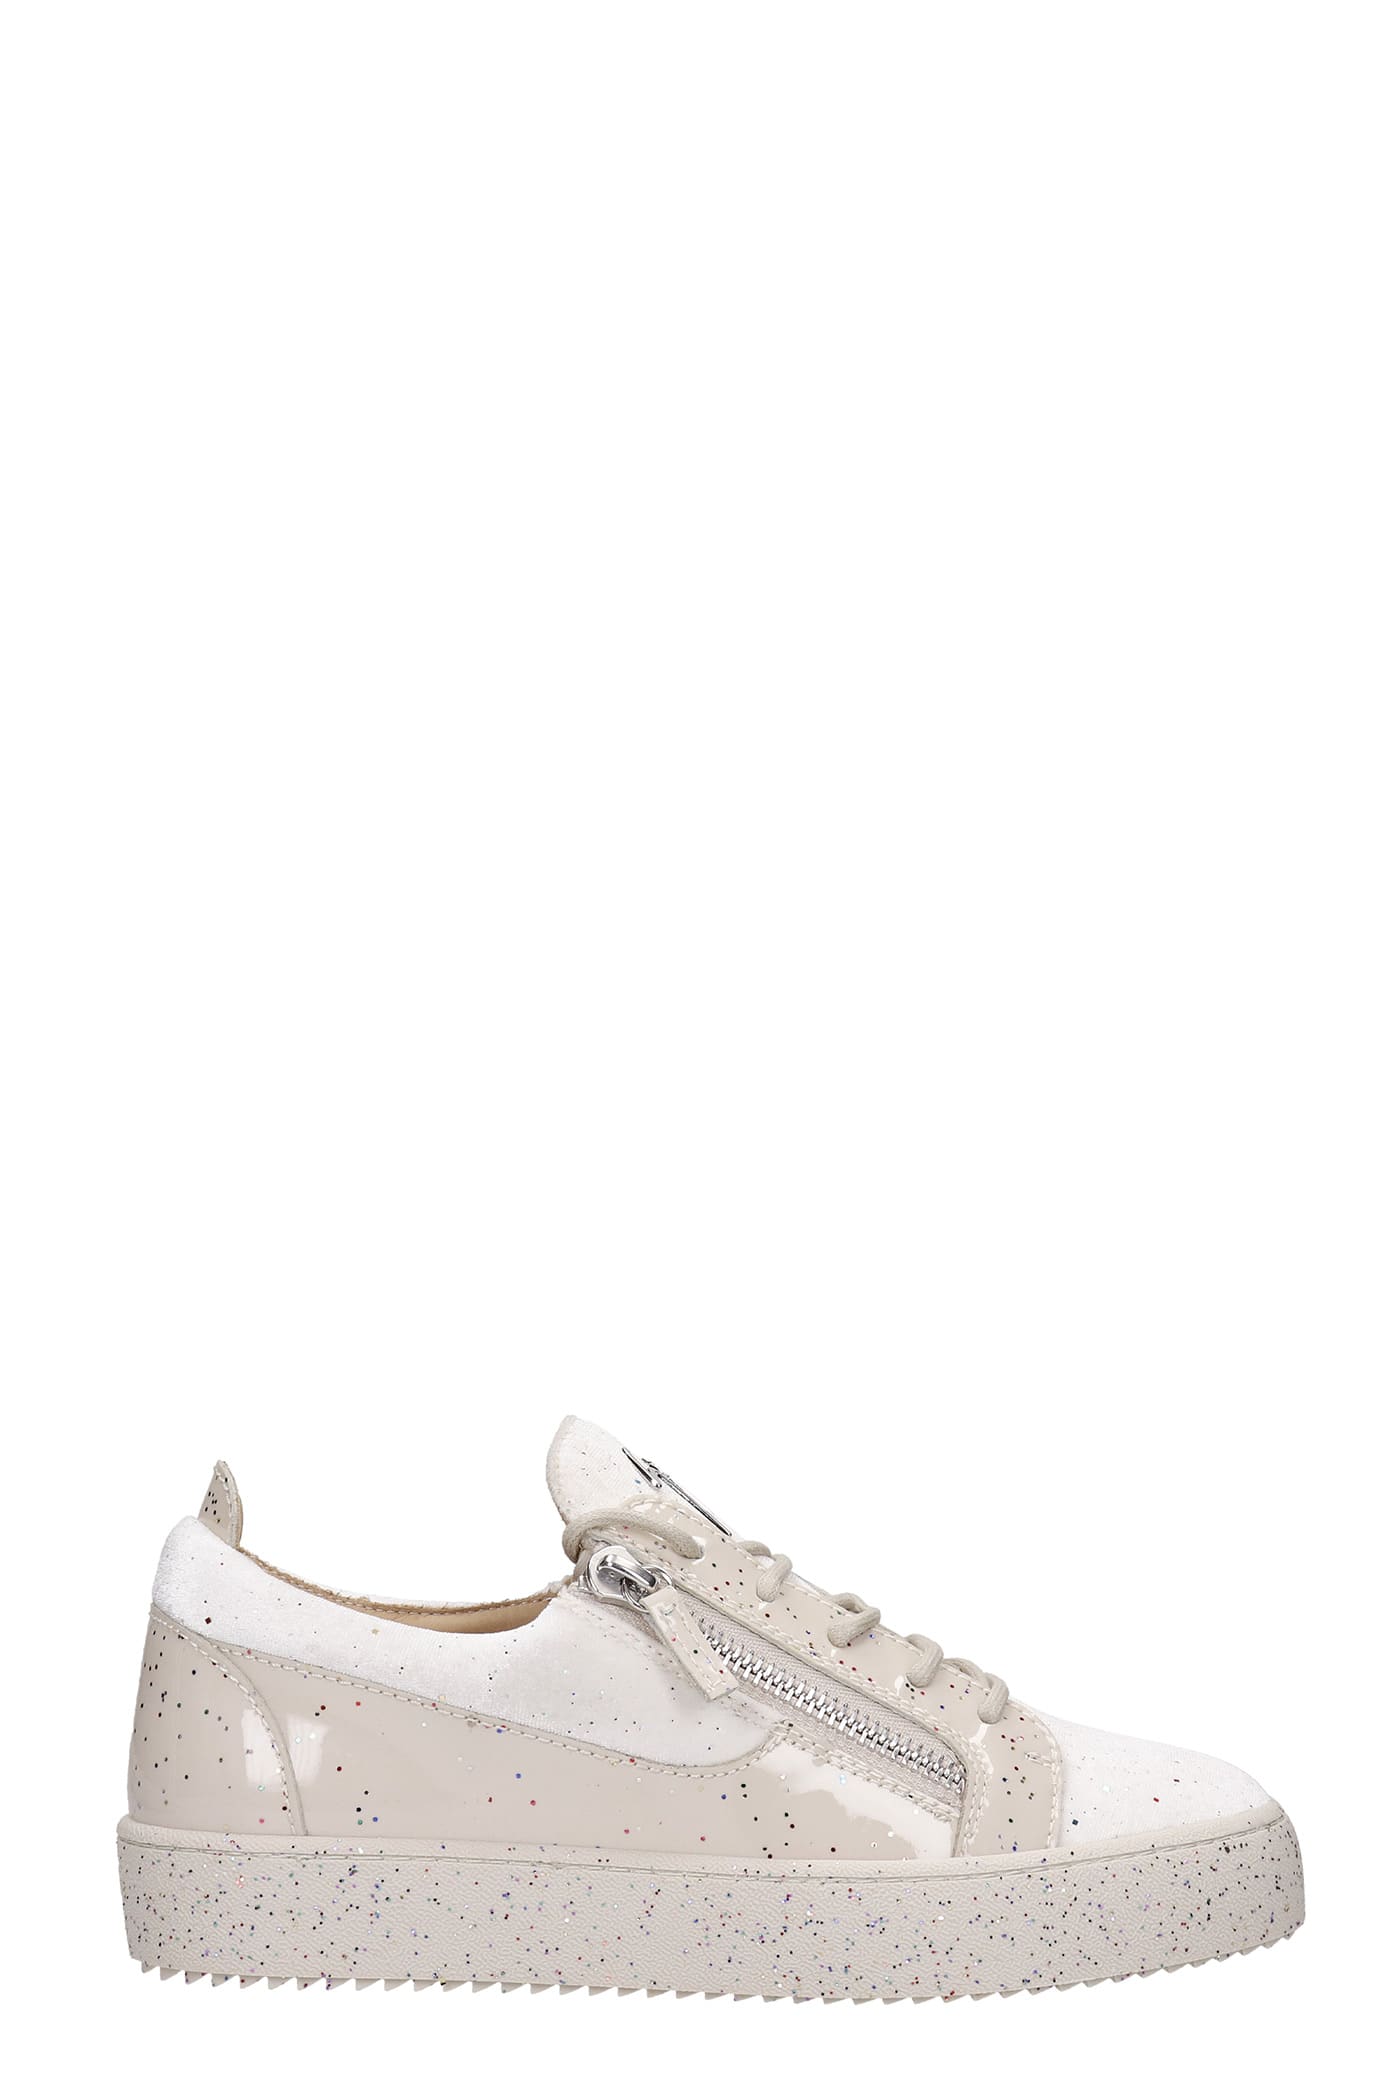 Giuseppe Zanotti Frankie Sneakers In White Velvet